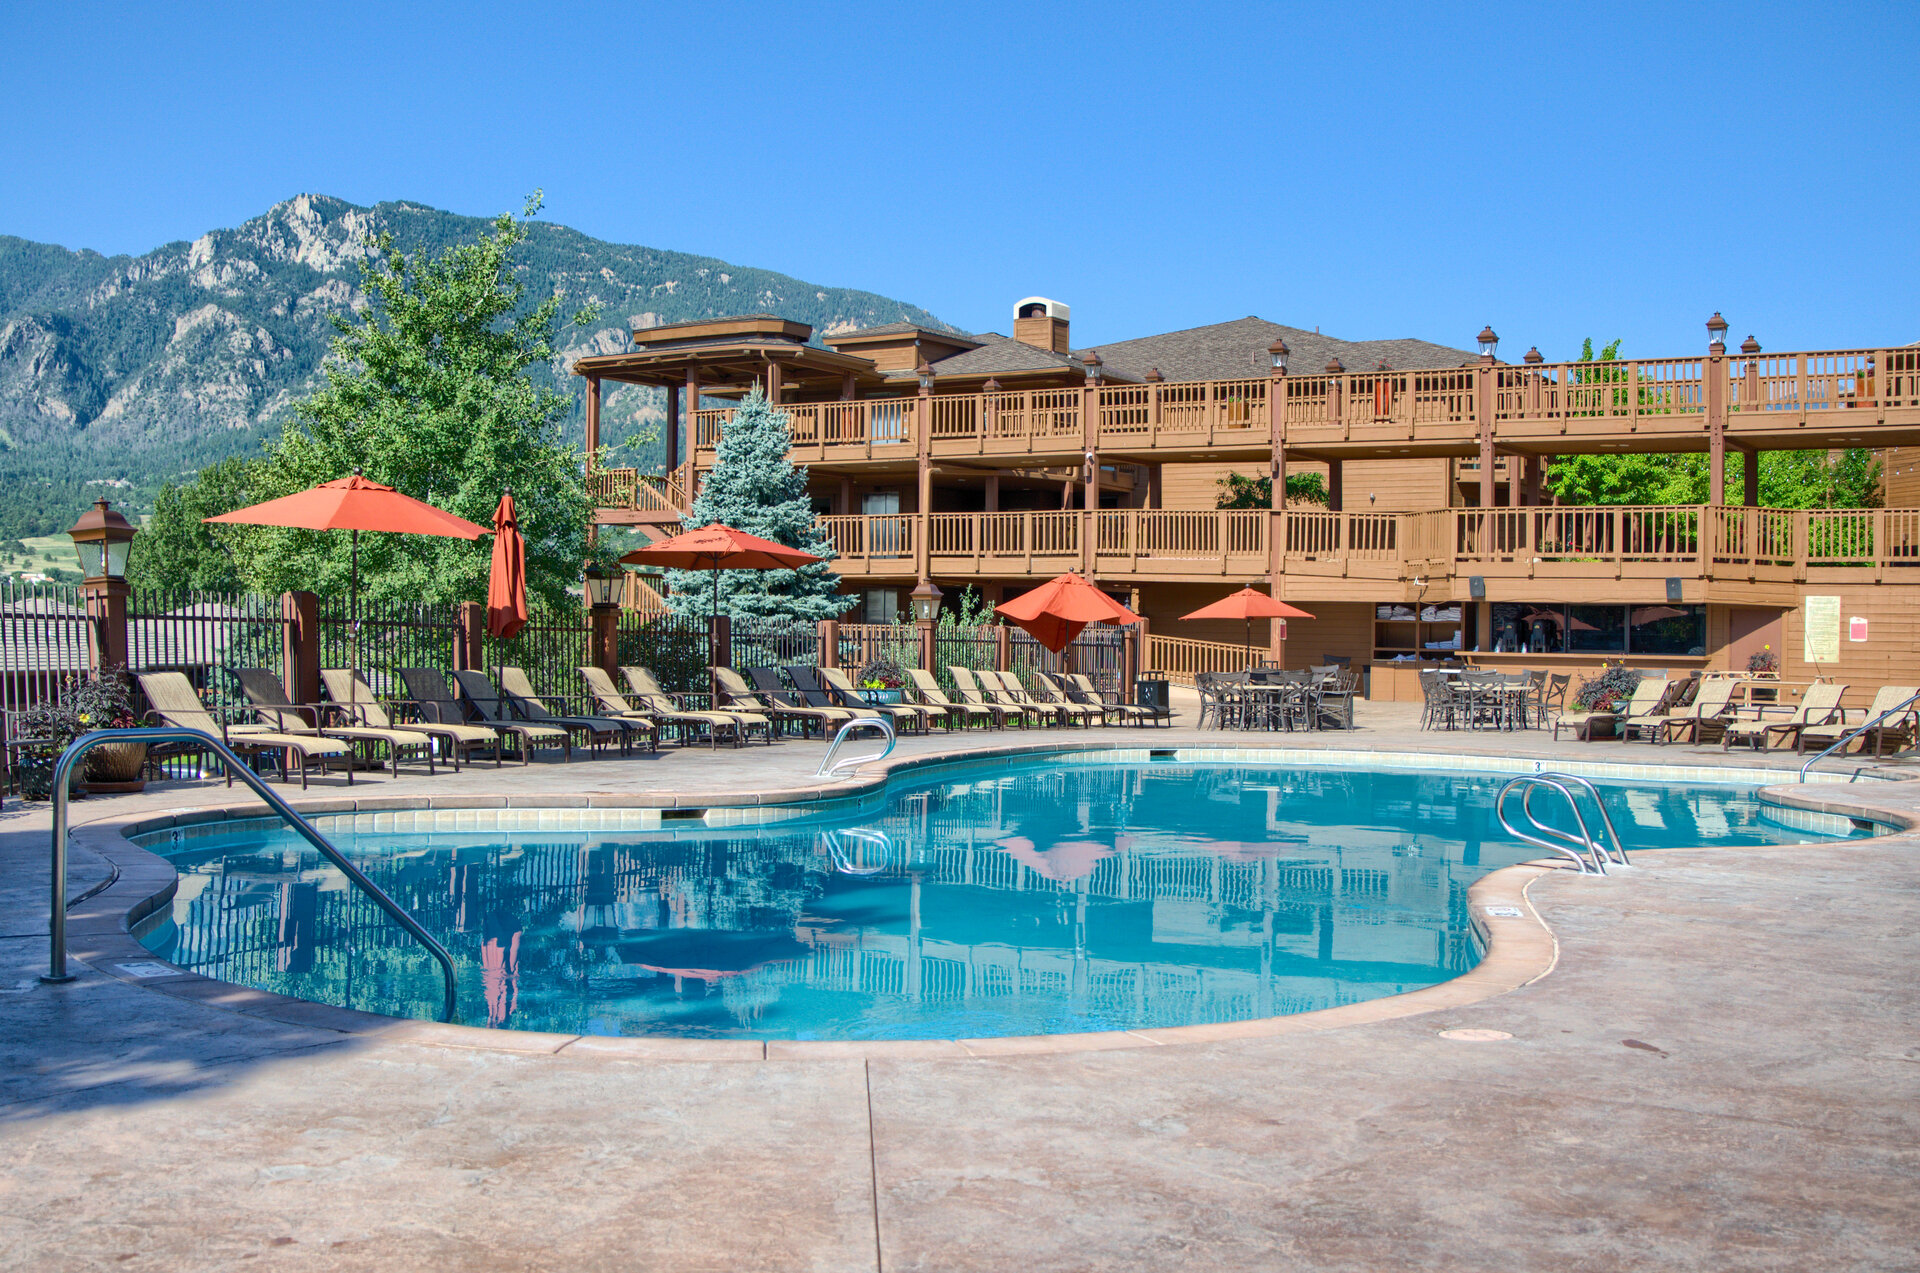 Cheyenne Mountain Resort Pool